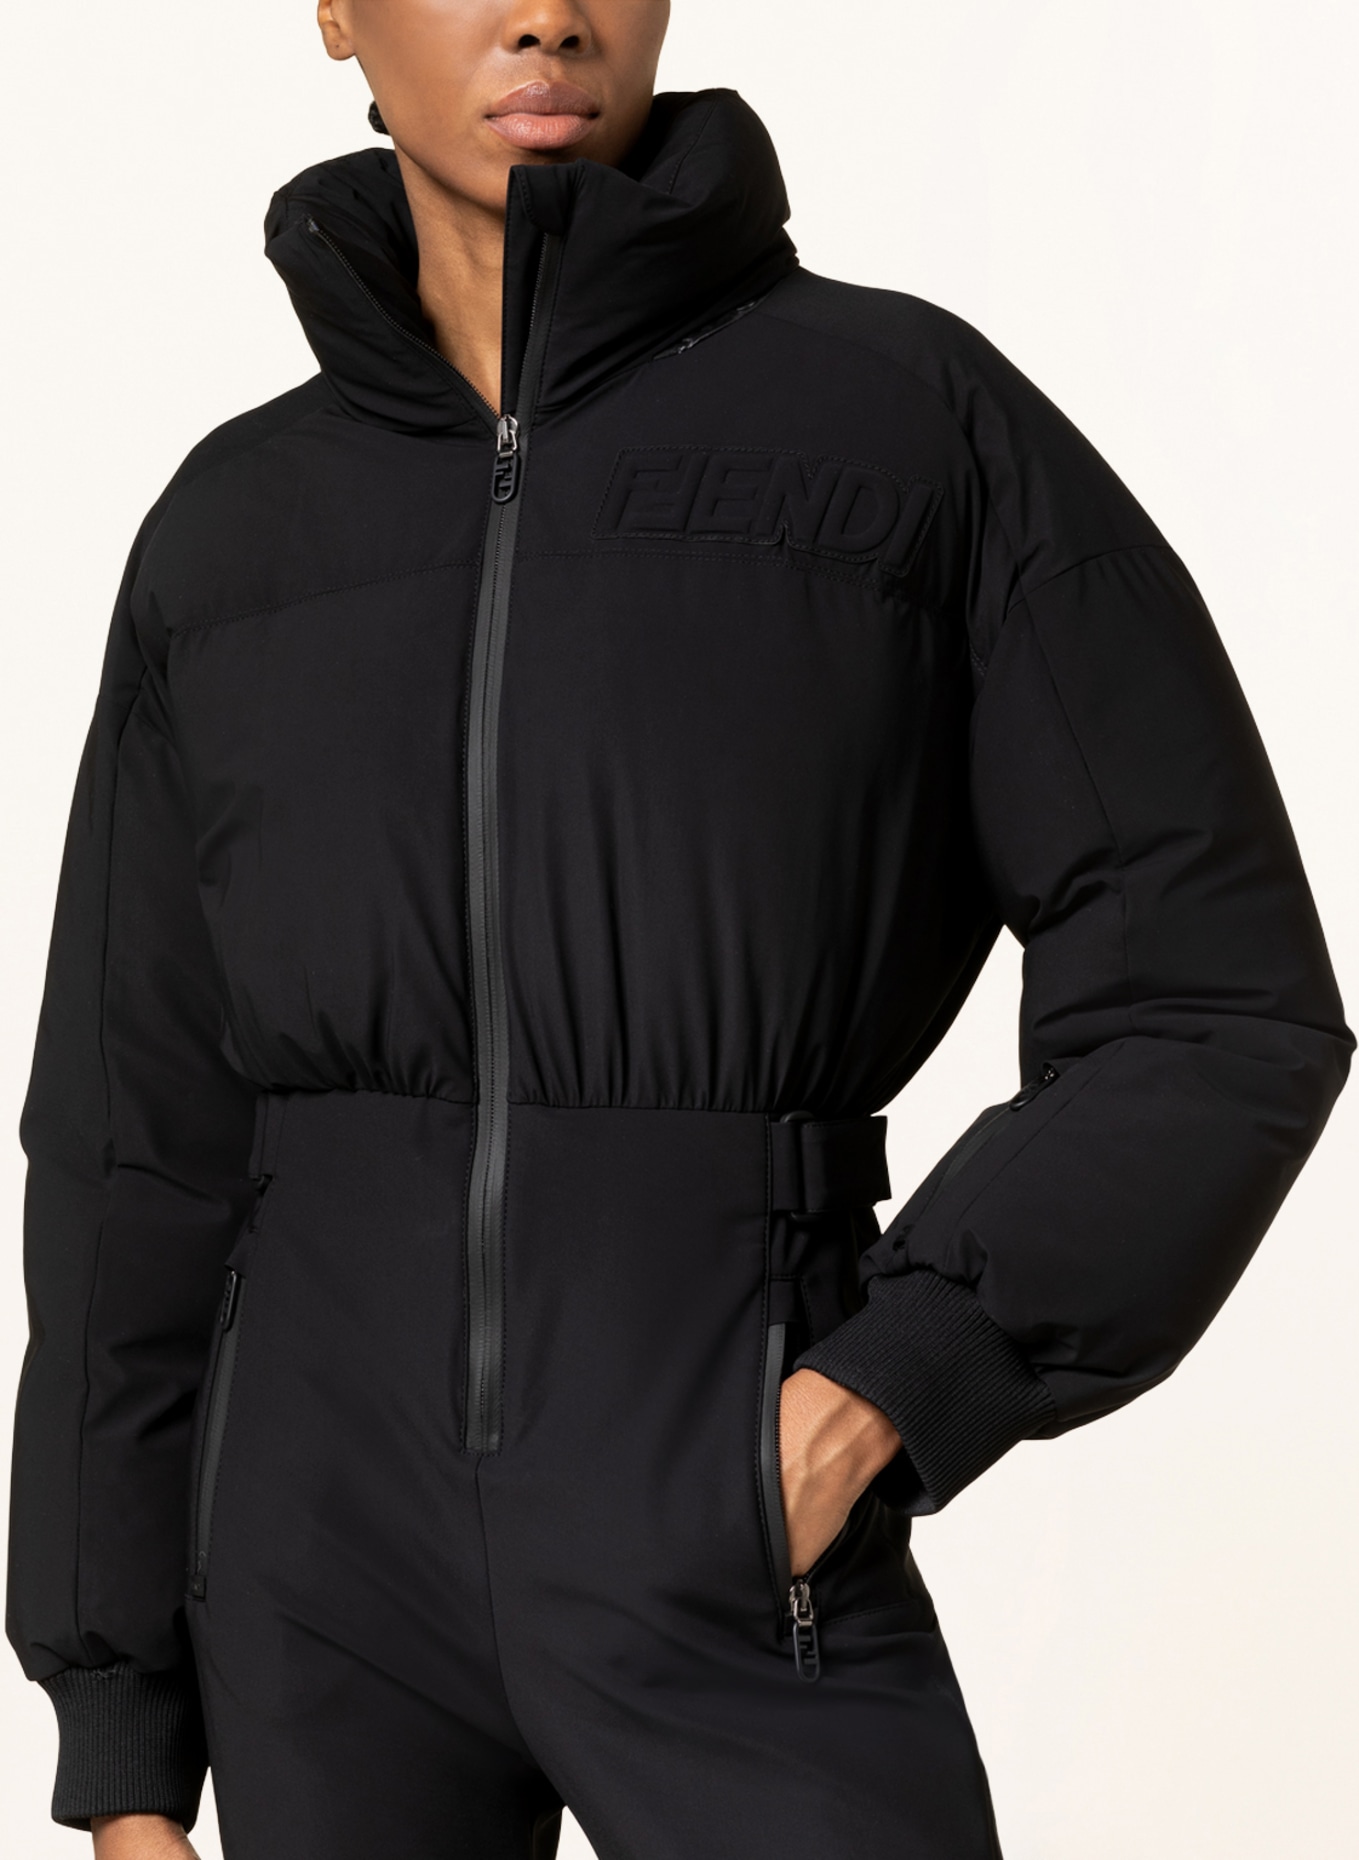 FENDI Ski overalls in black